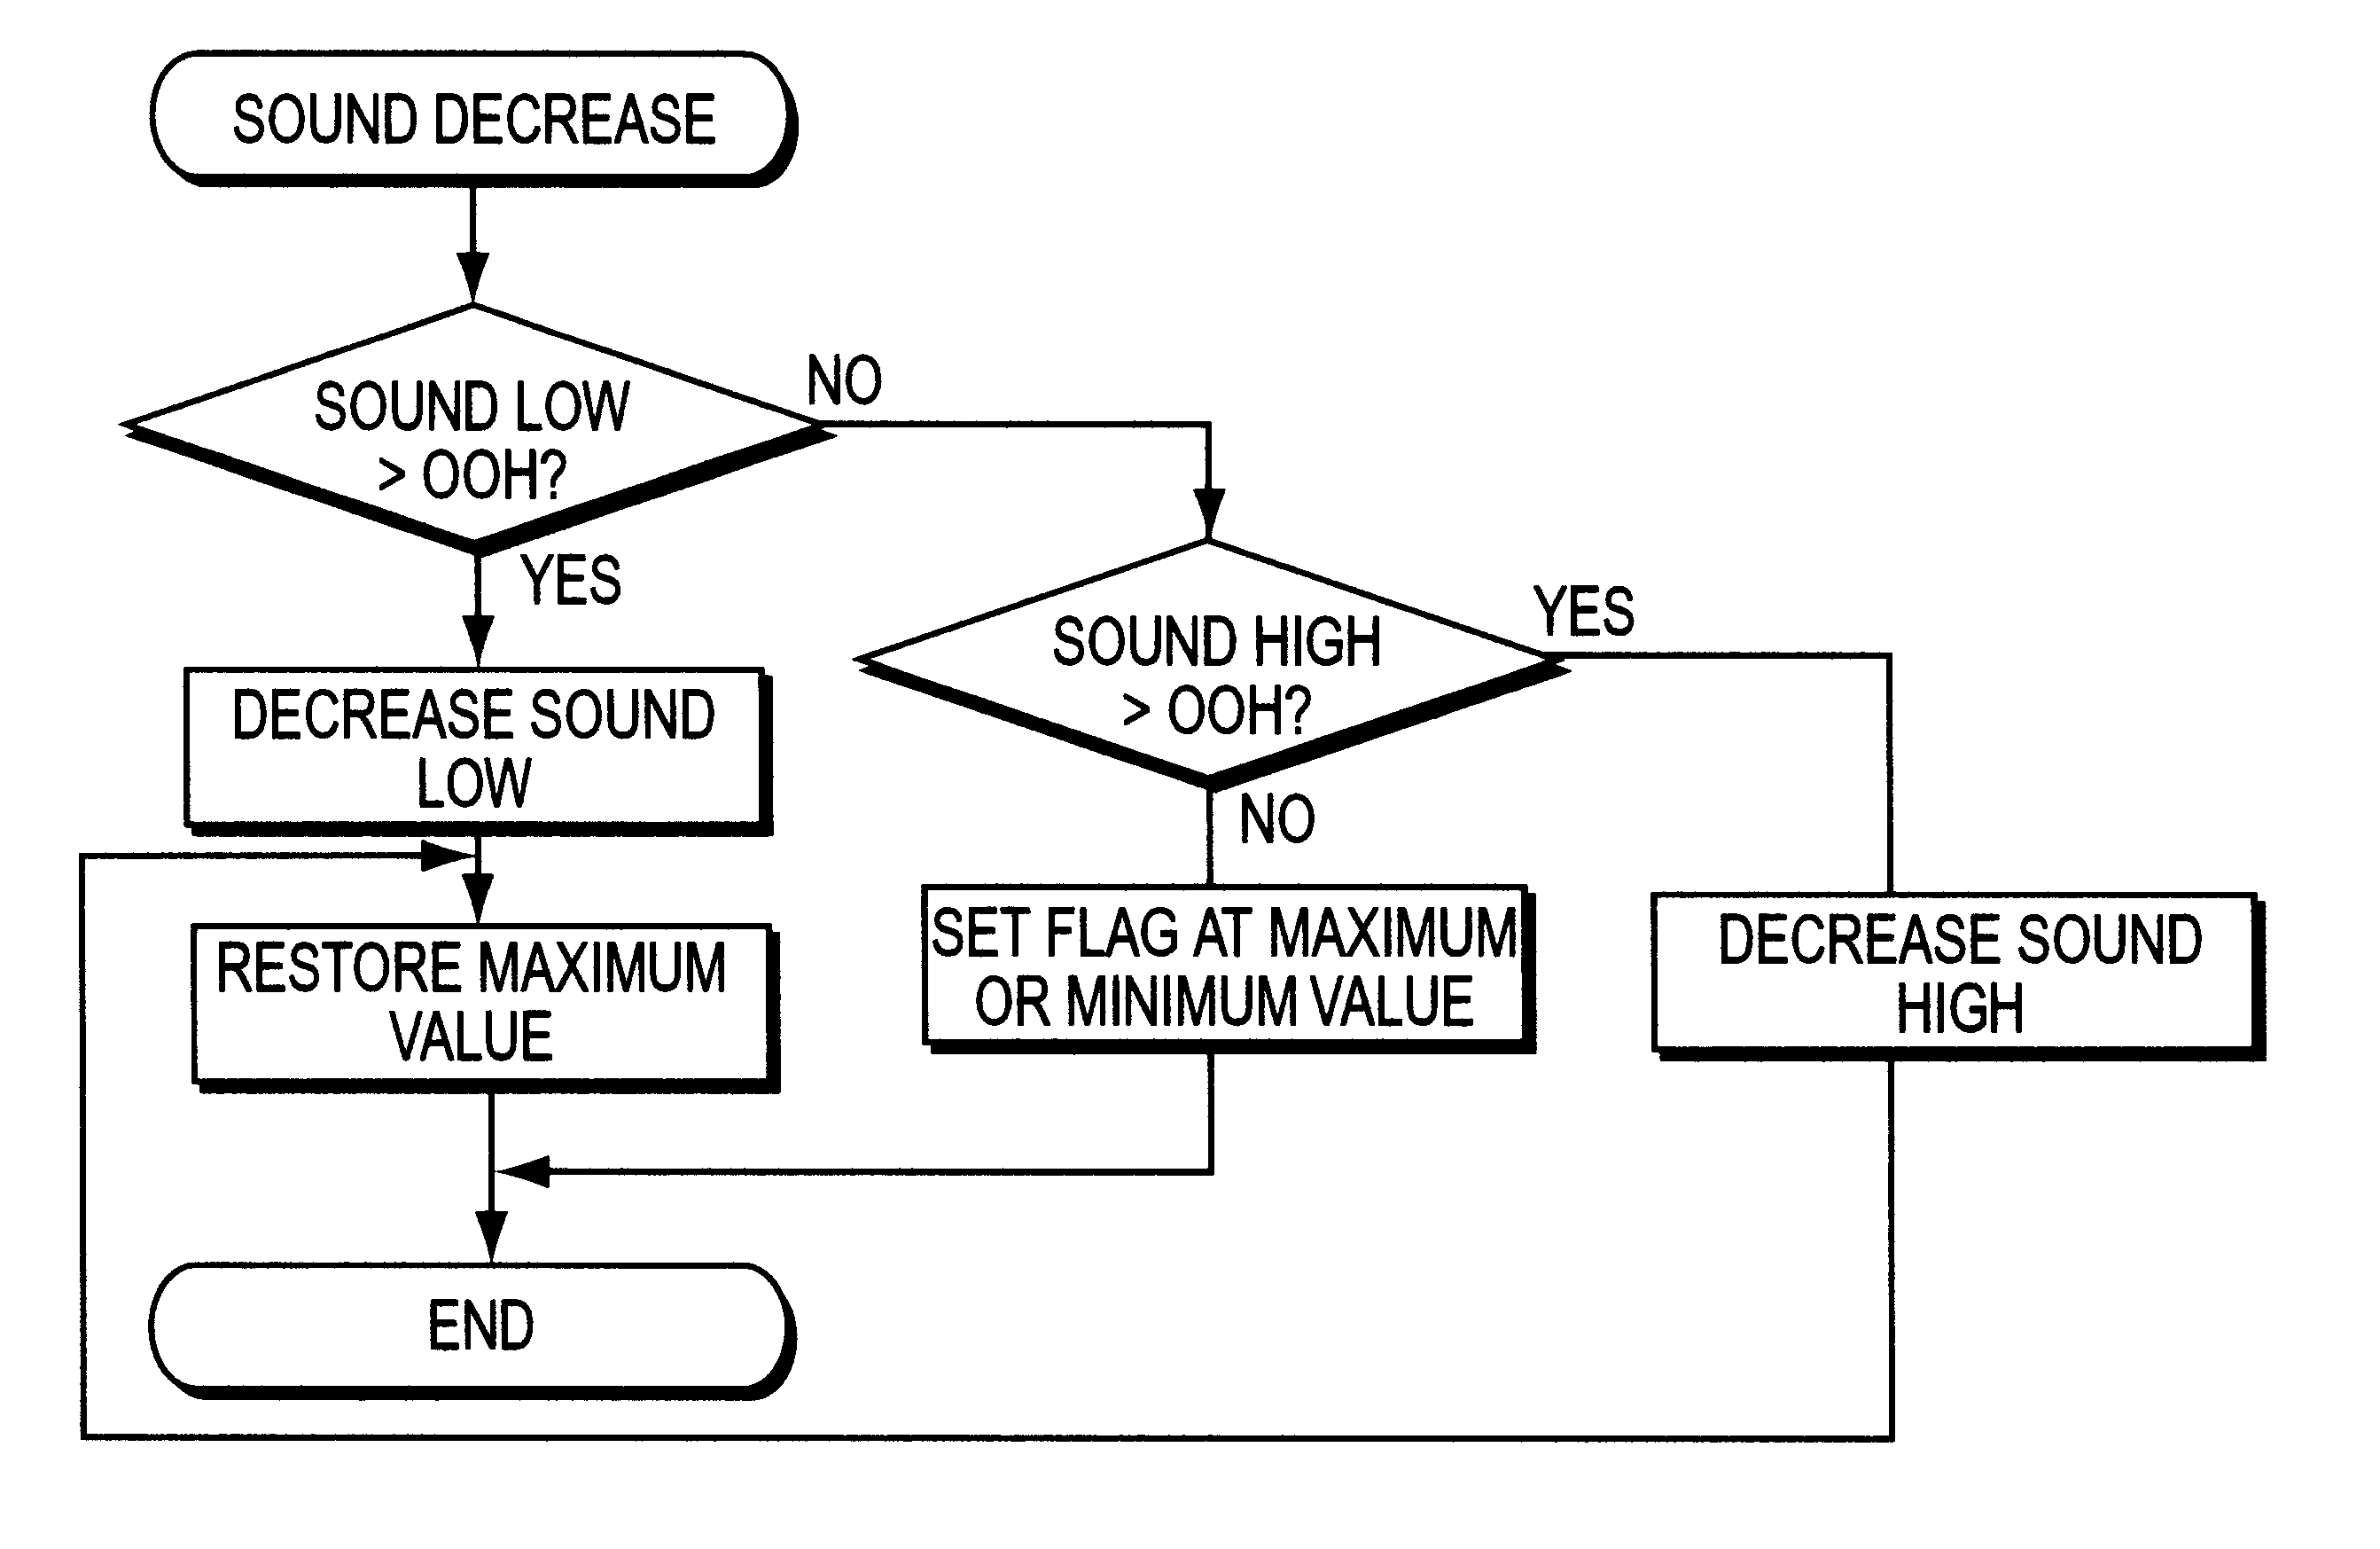 Sound control circuit and method using microcomputer